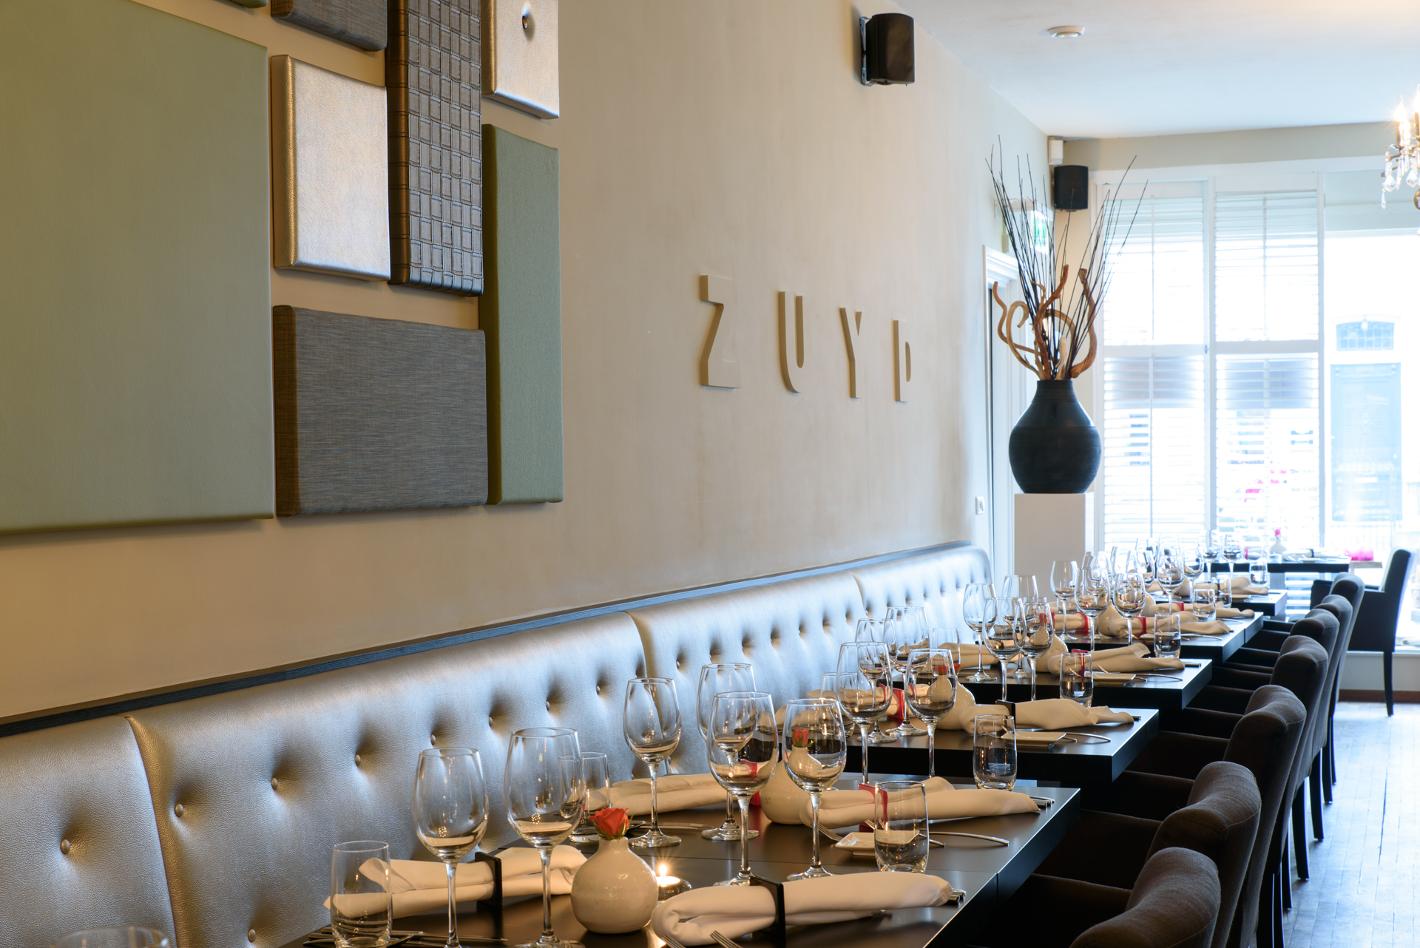 Photo Restaurant Zuyd in Breda, Eat & drink, Lunch, Dining - #1